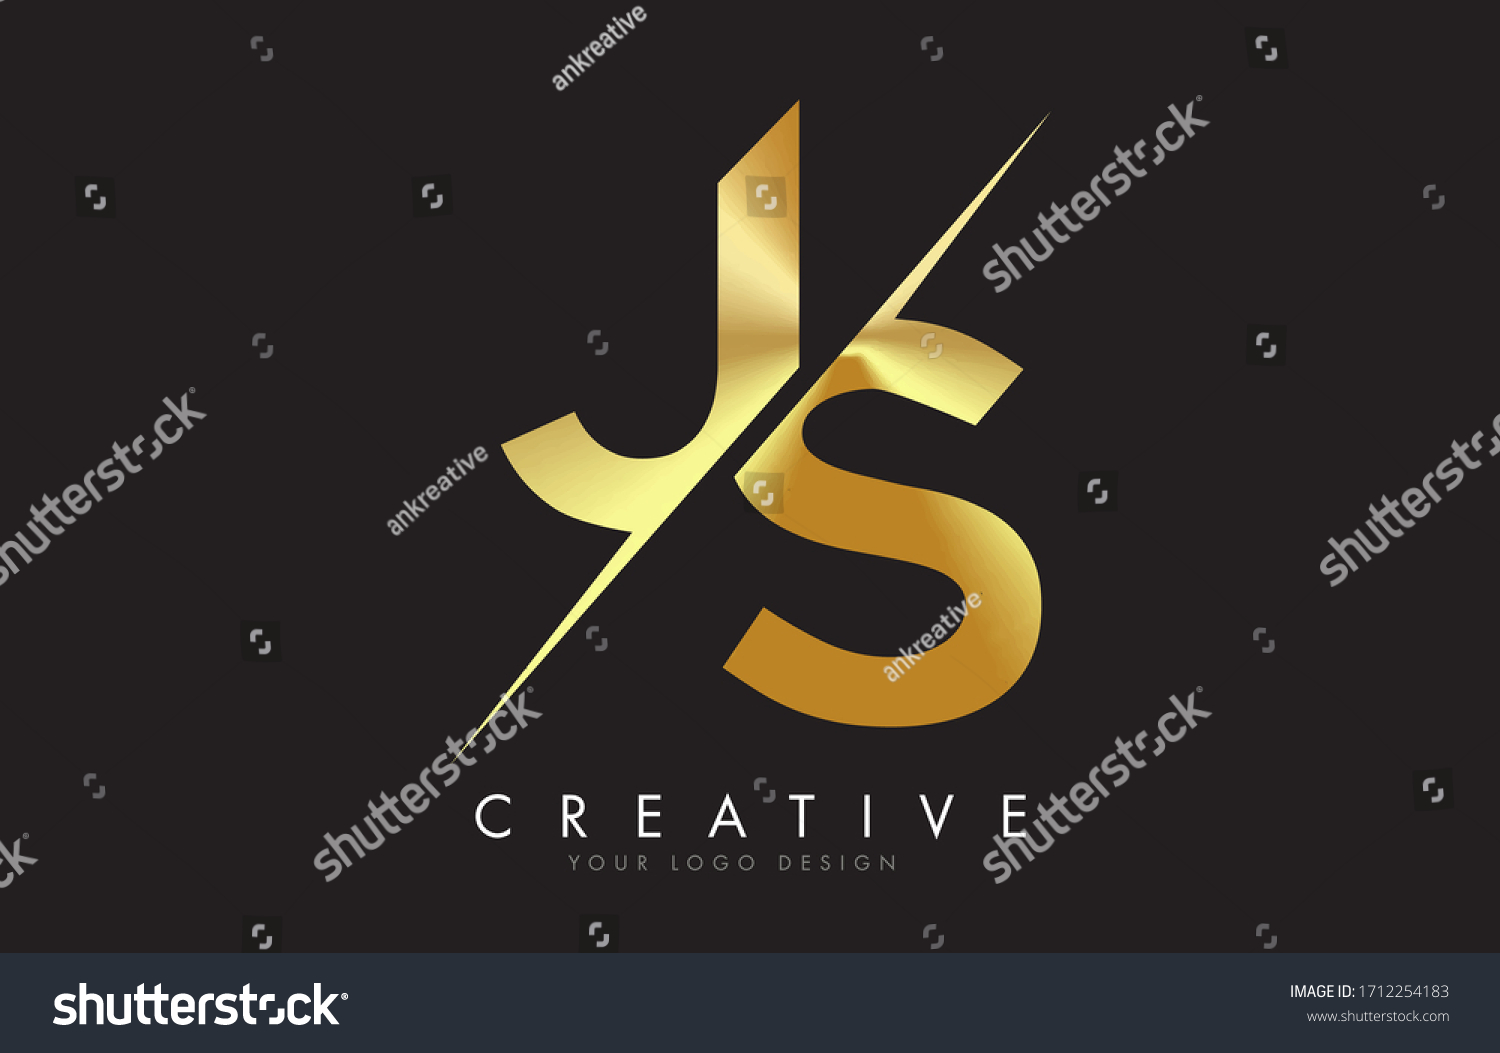 S j images. Js картинки. Sh j logo. JAVASCRIPT logo. Logo j Gold.